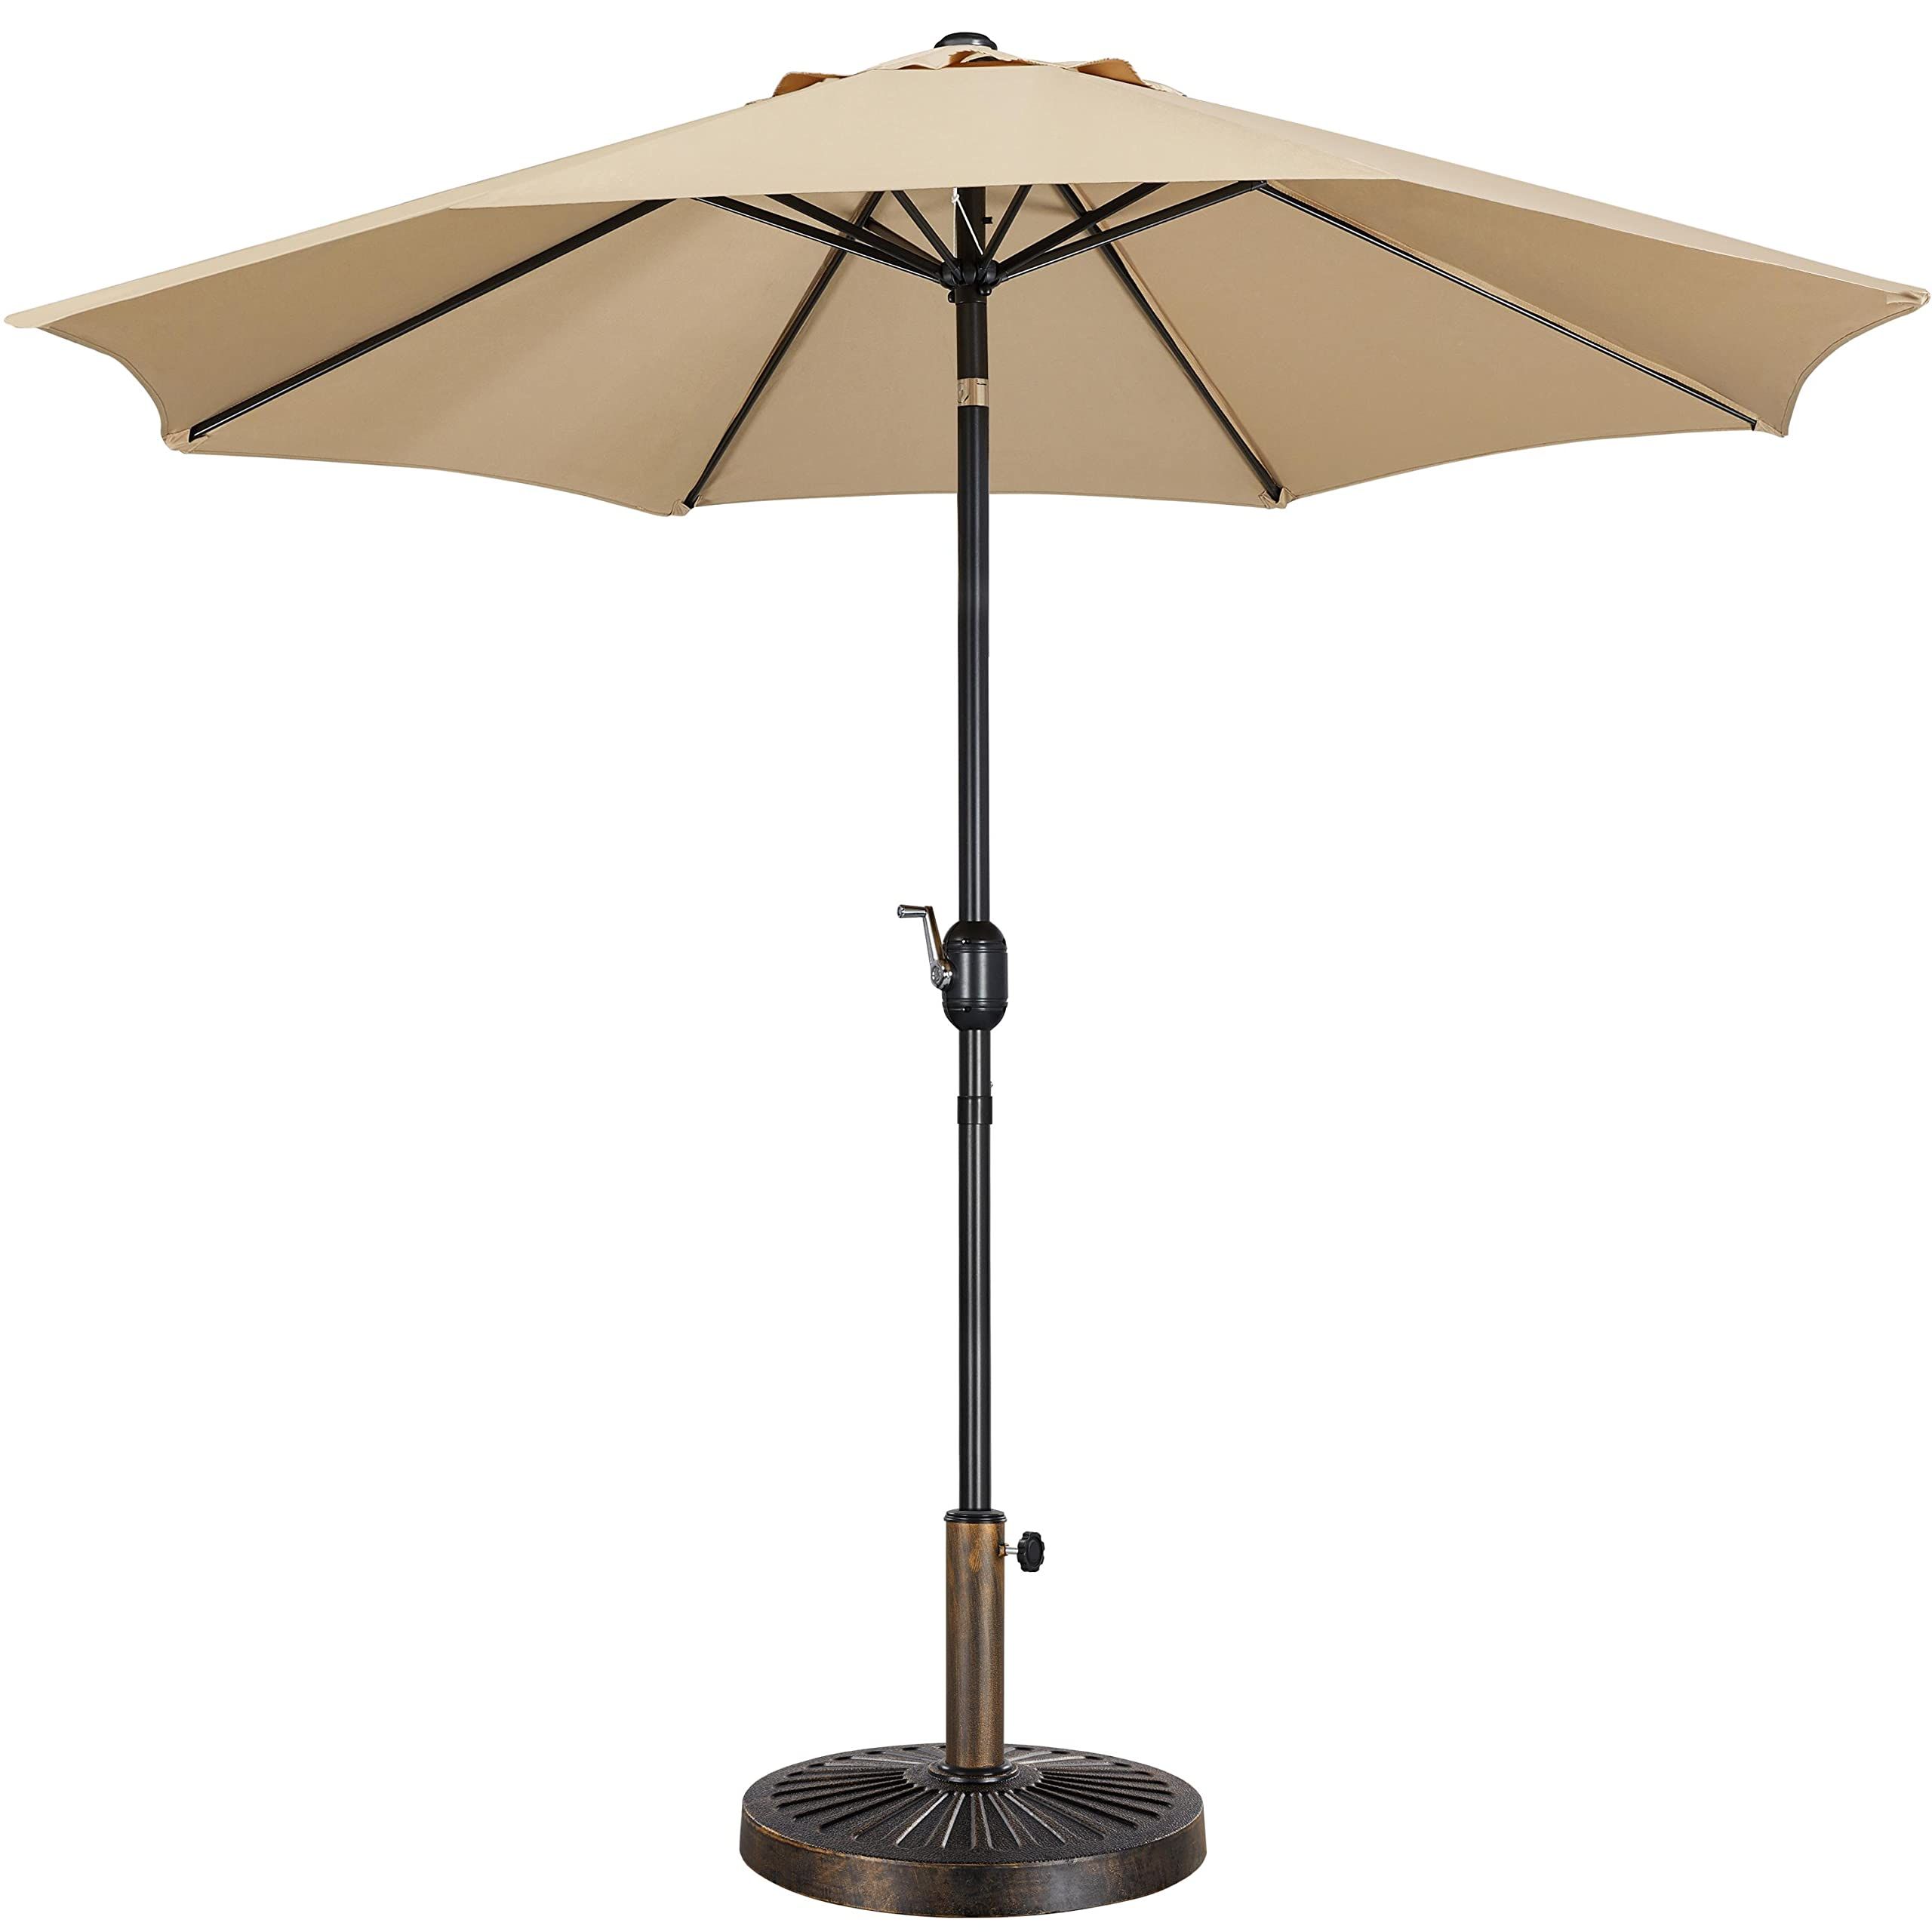 Yaheetech 9FT Garden Table Umbrella with 30lb Base, Patio Market Umbrella with Push Button Tilt, Crank and 8 Sturdy Ribs, Outdoor Umbrella w/Base Included Heavy Duty - Tan | Amazon (US)